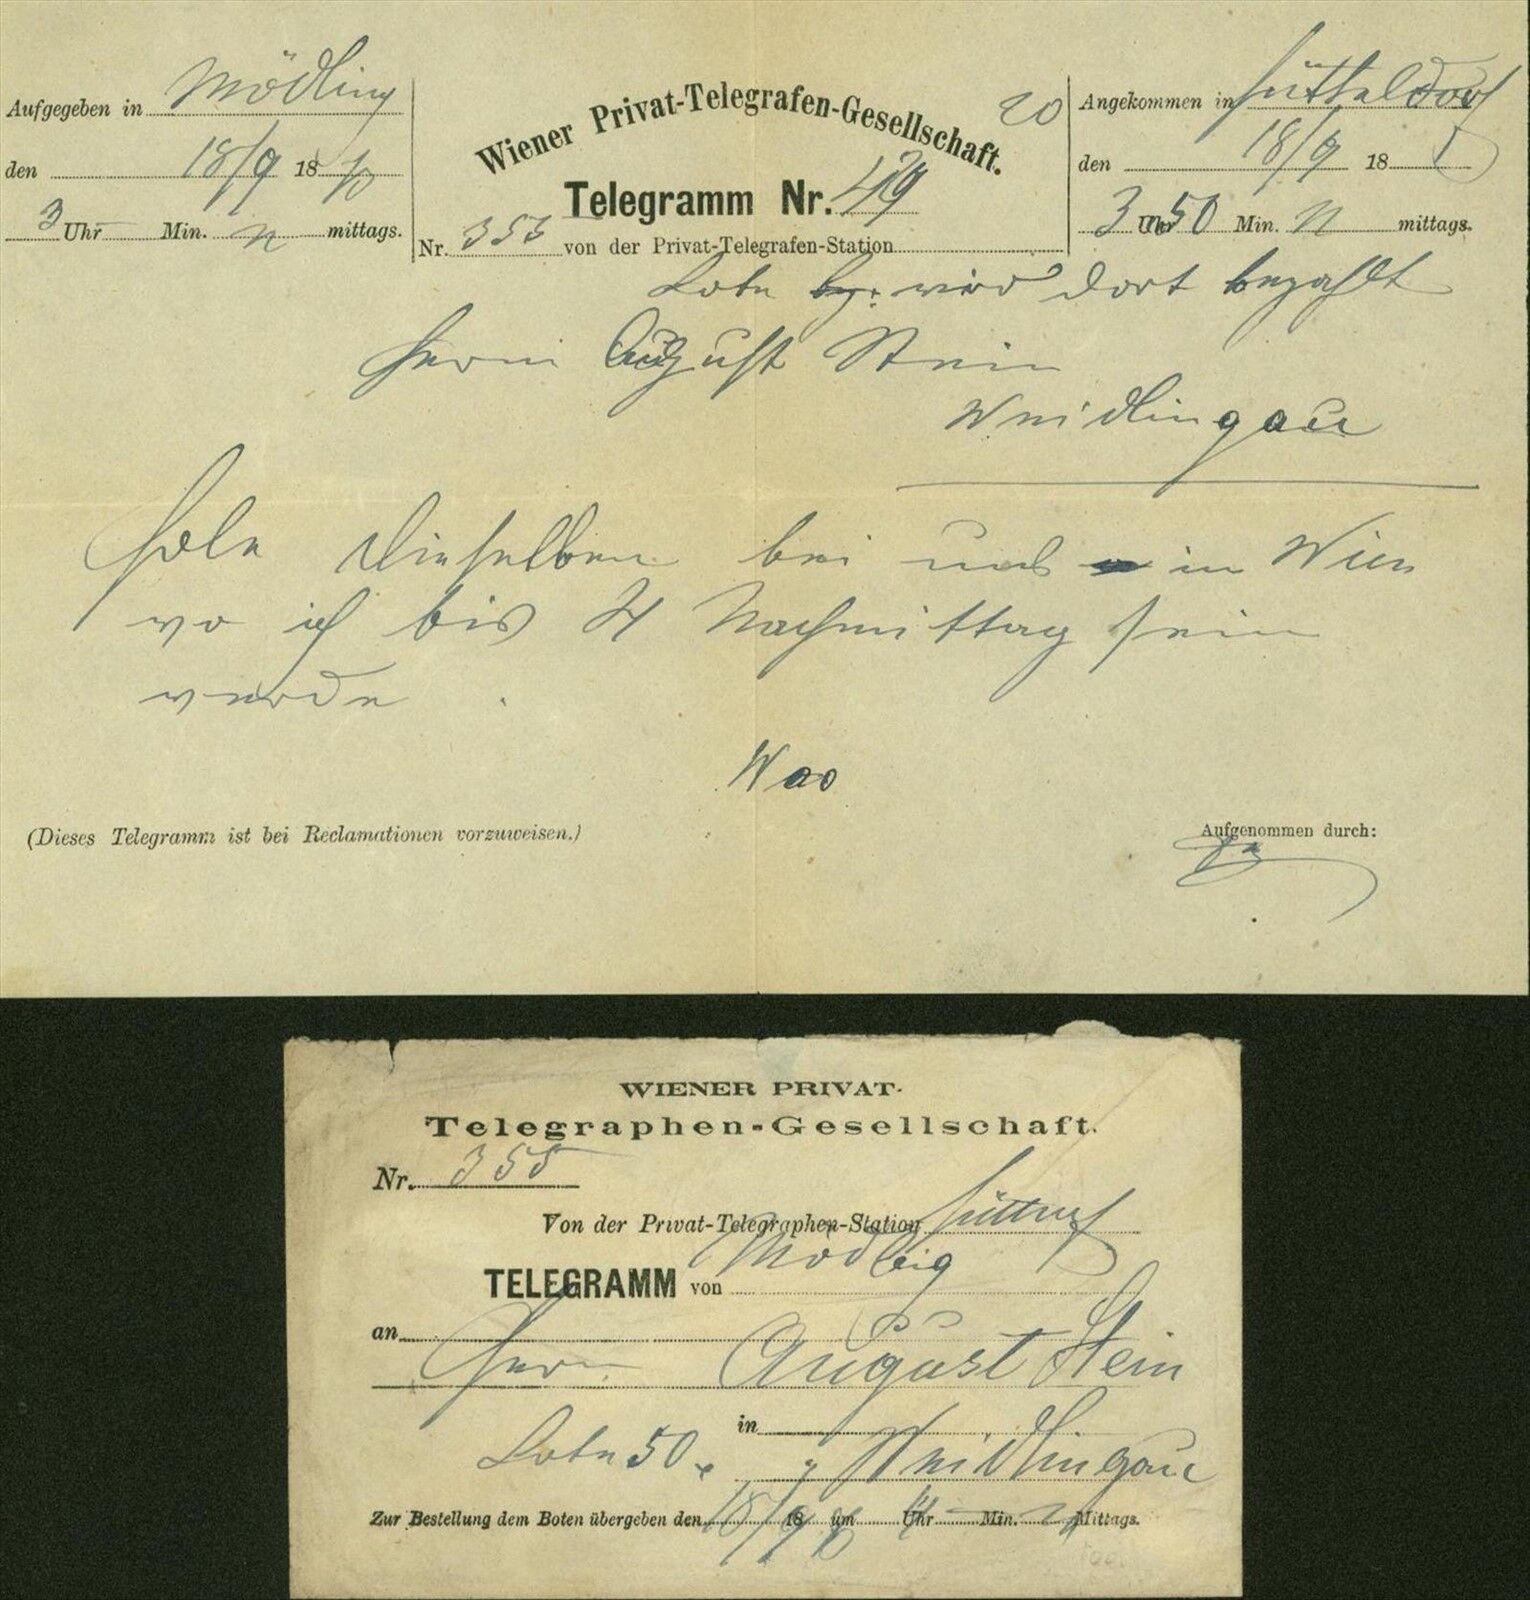 Telegram of Private Telegraph, Vienna